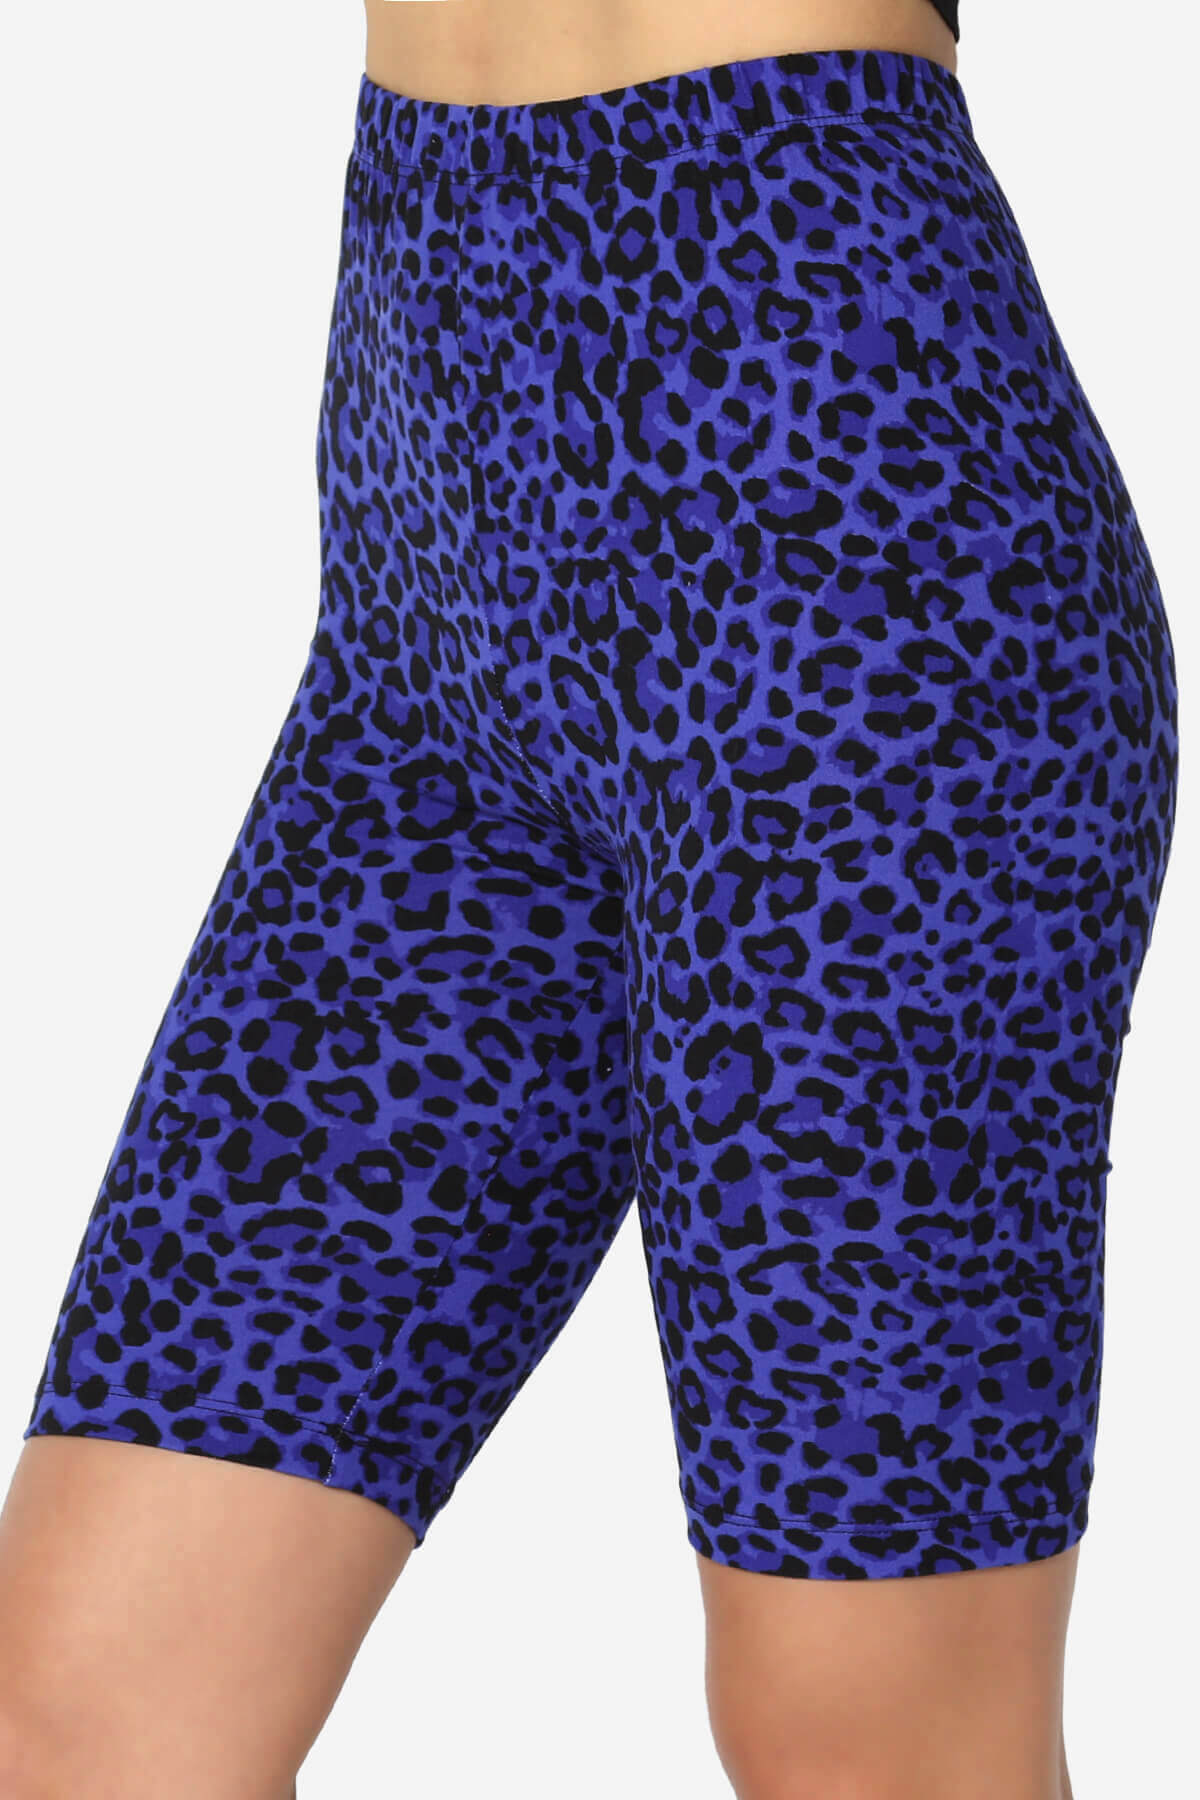 Load image into Gallery viewer, Michigan Cheetah Print Microfiber Bike Short Leggings BRIGHT BLUE_5
